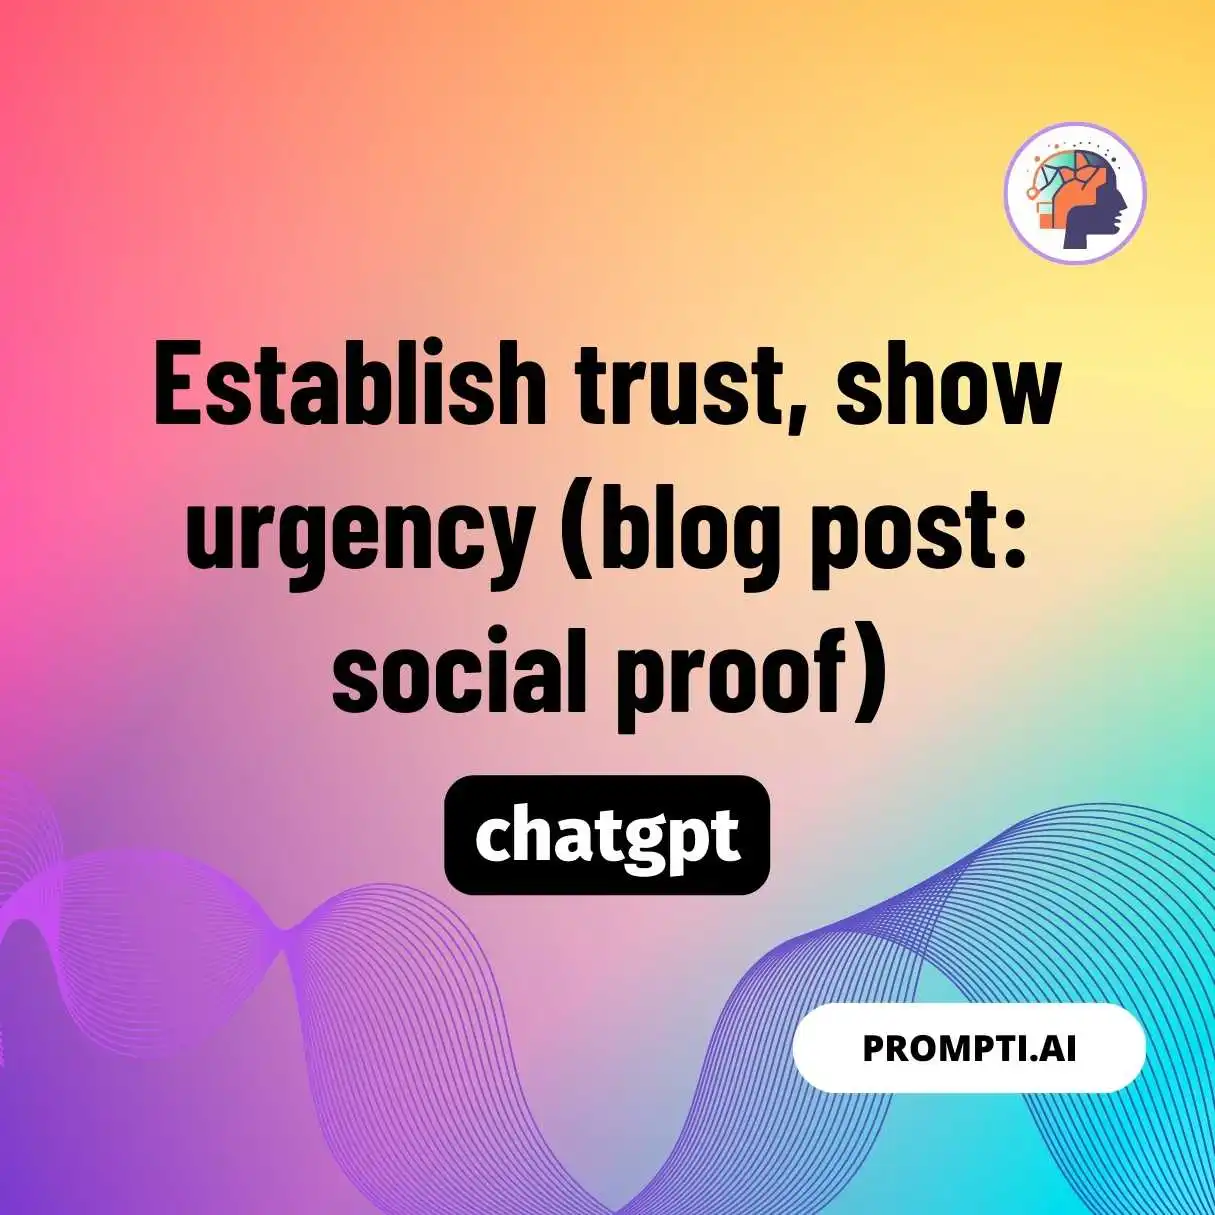 Establish trust, show urgency (blog post: social proof)